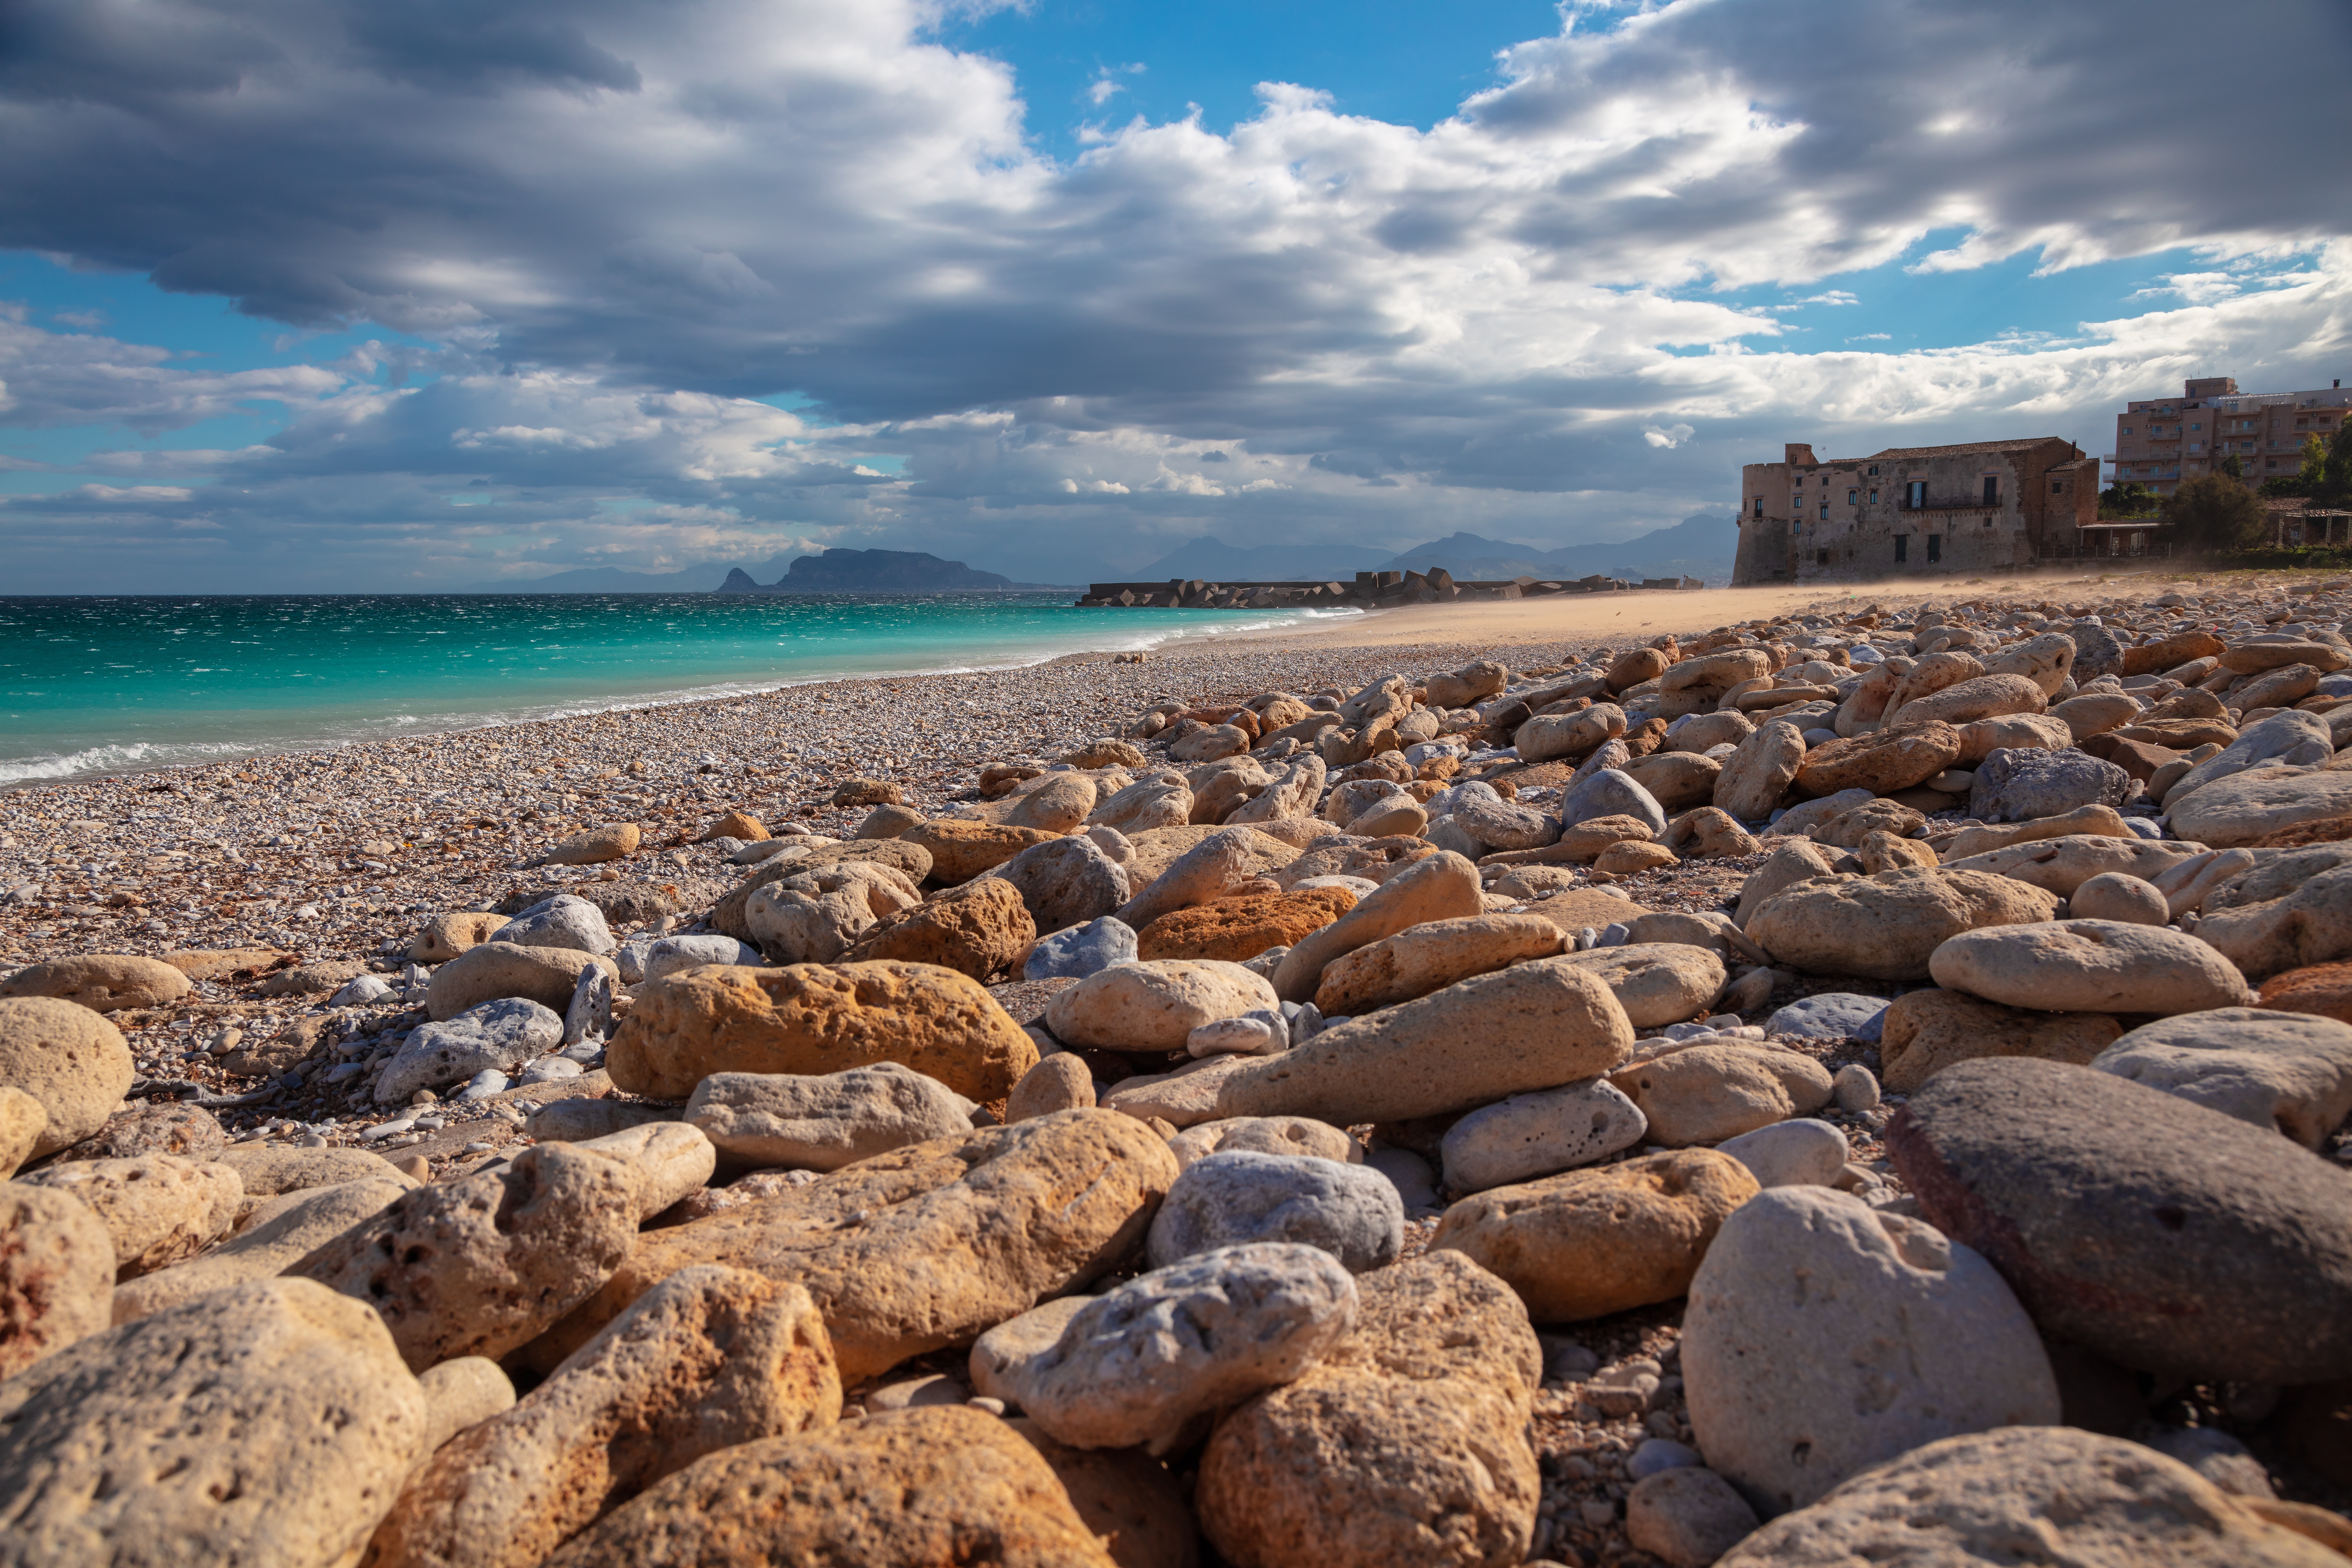 Spiaggia Vergine Maria. Shutterstock by Rudy Balasko